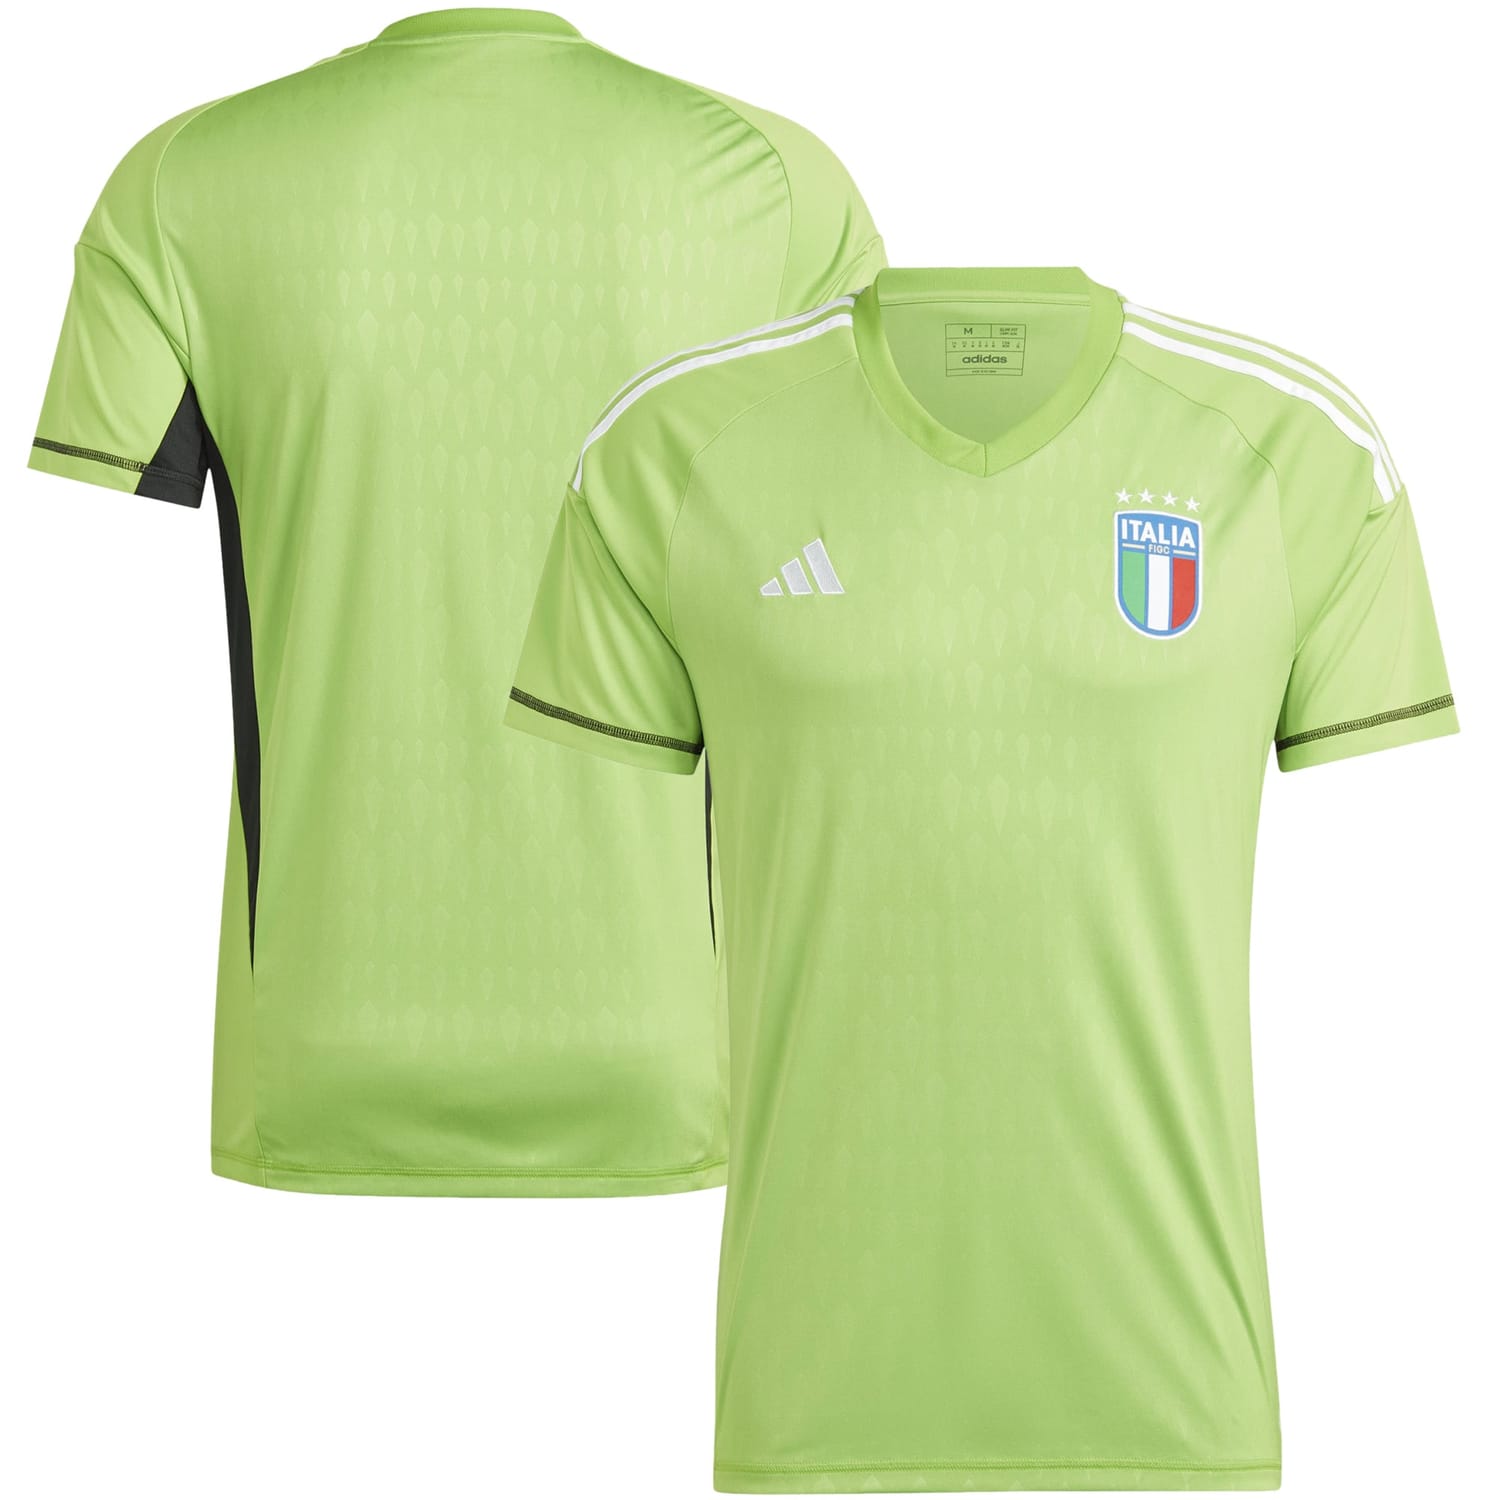 Italy National Team Goalkeeper Jersey Shirt for Men